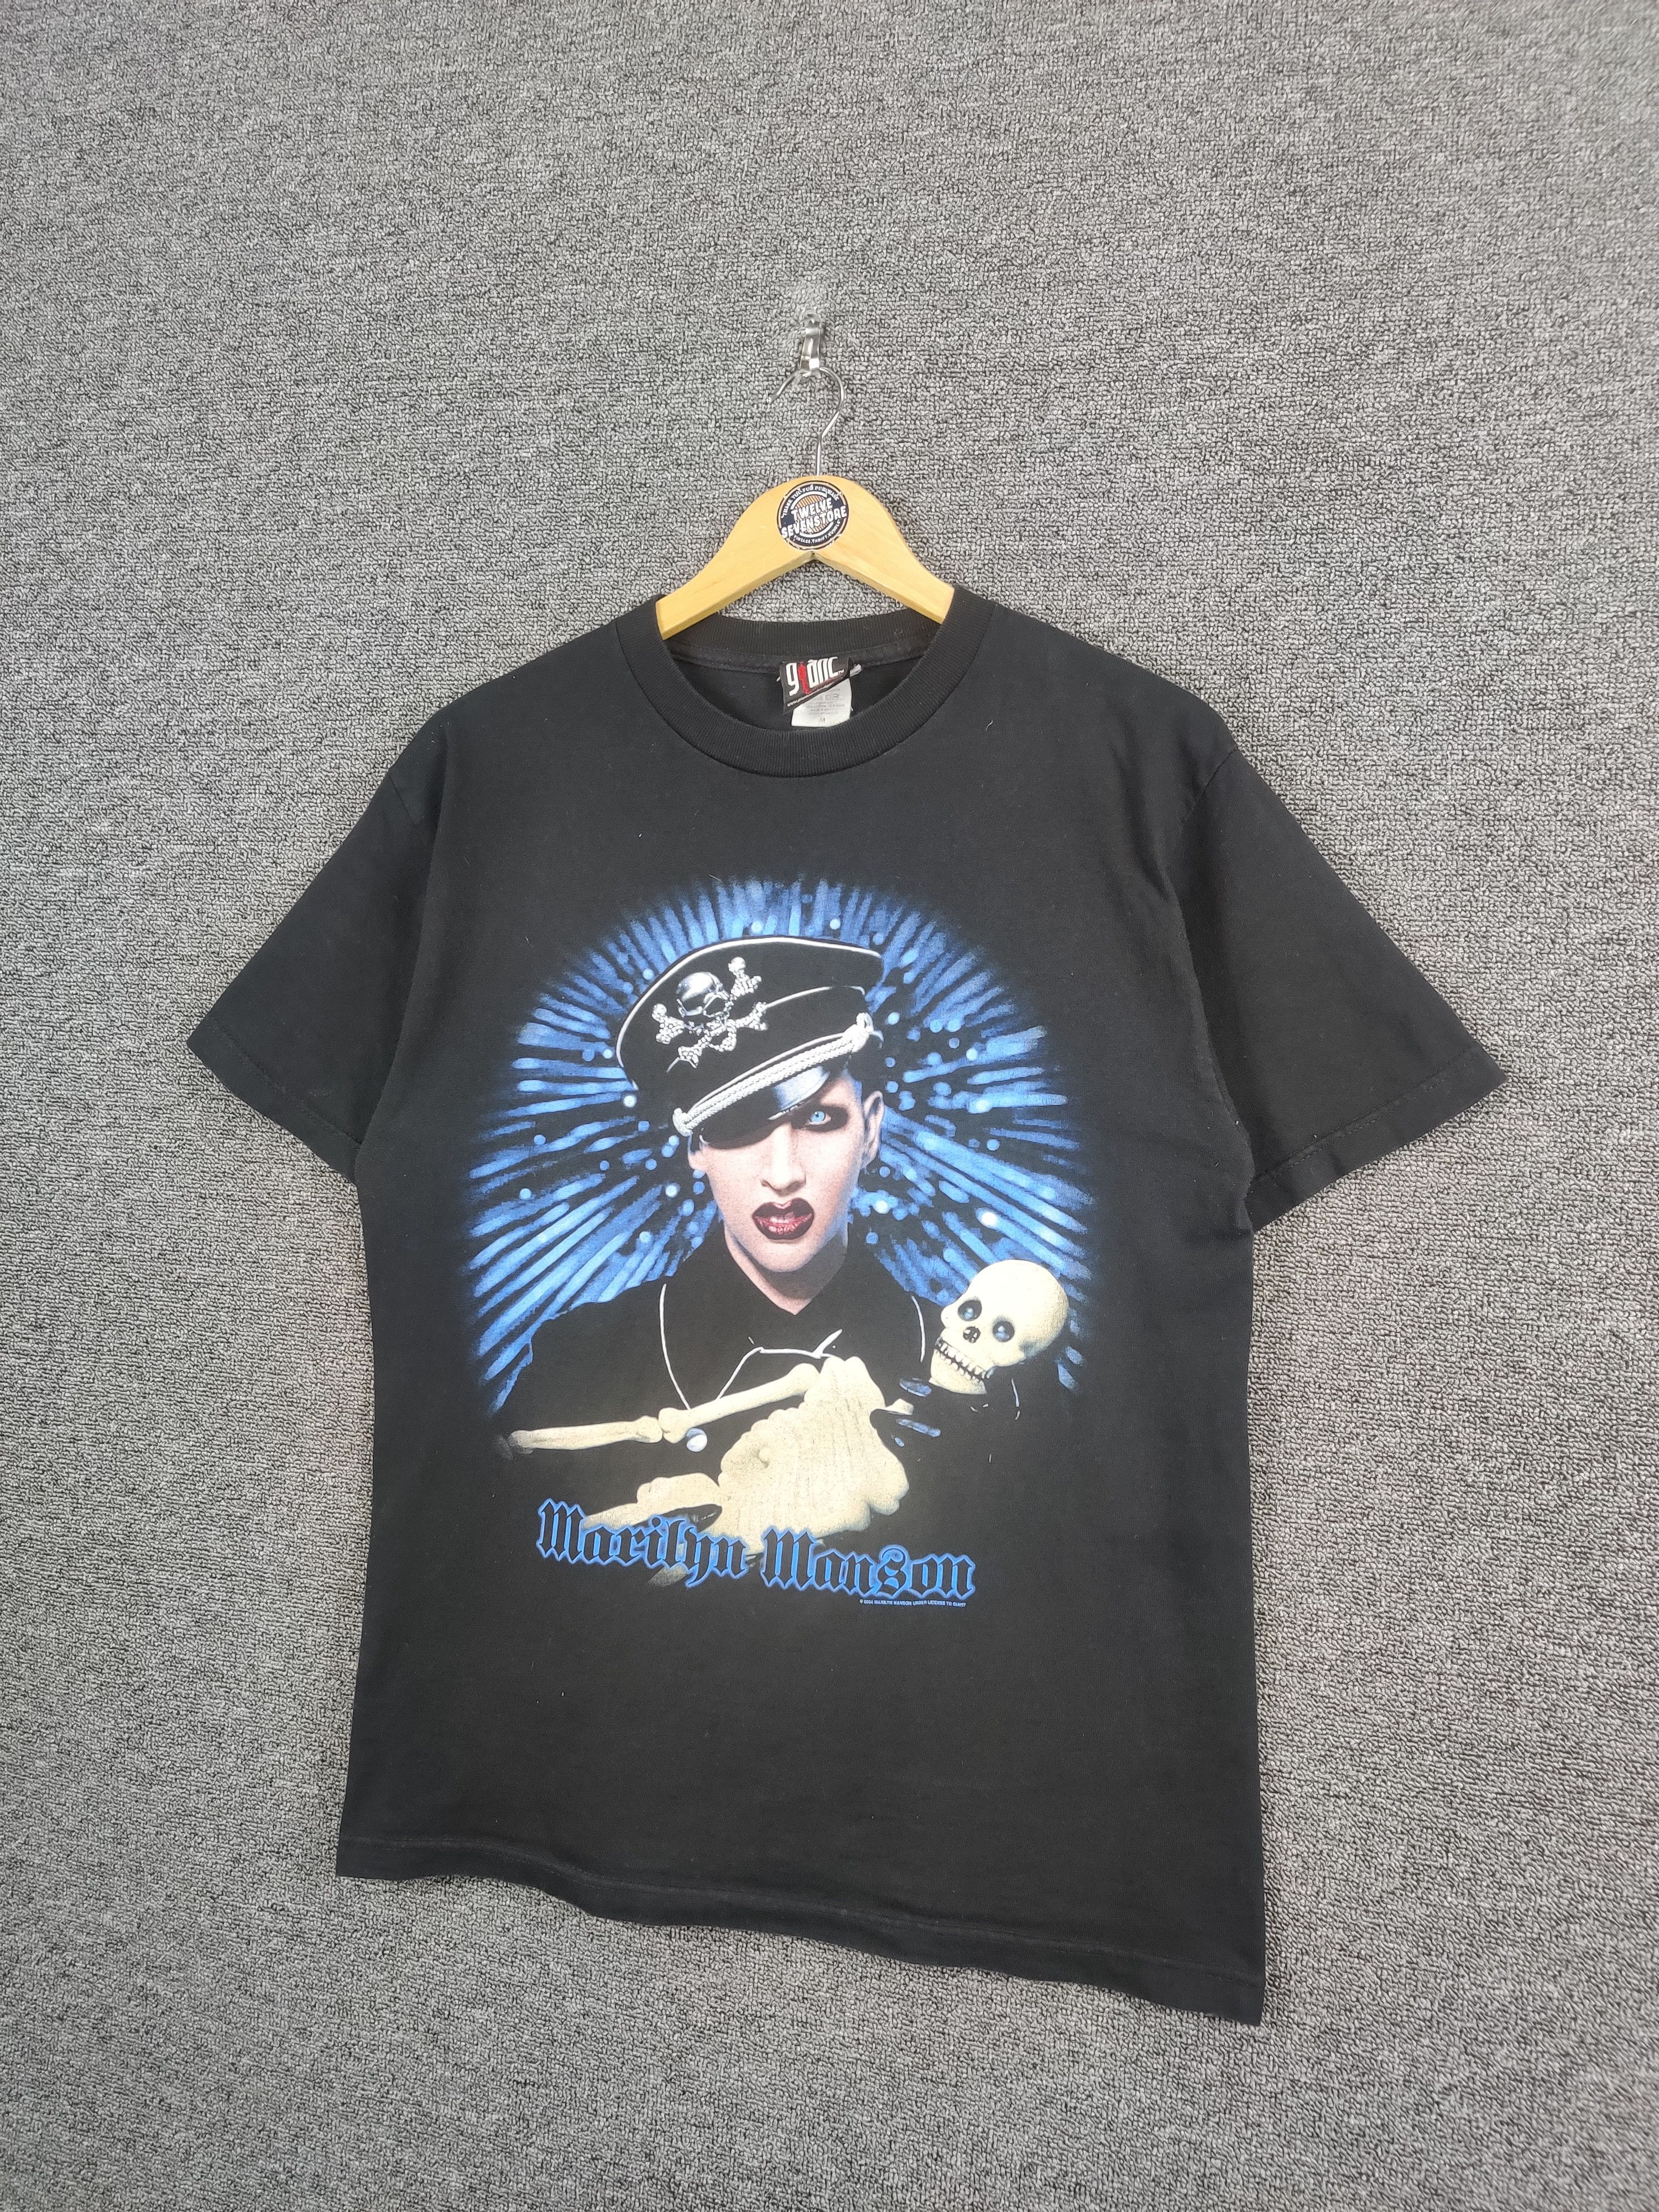 Vintage 2000 Vintage Marilyn Manson Band Tee Tshirt Size US M / EU 48-50 / 2 - 2 Preview